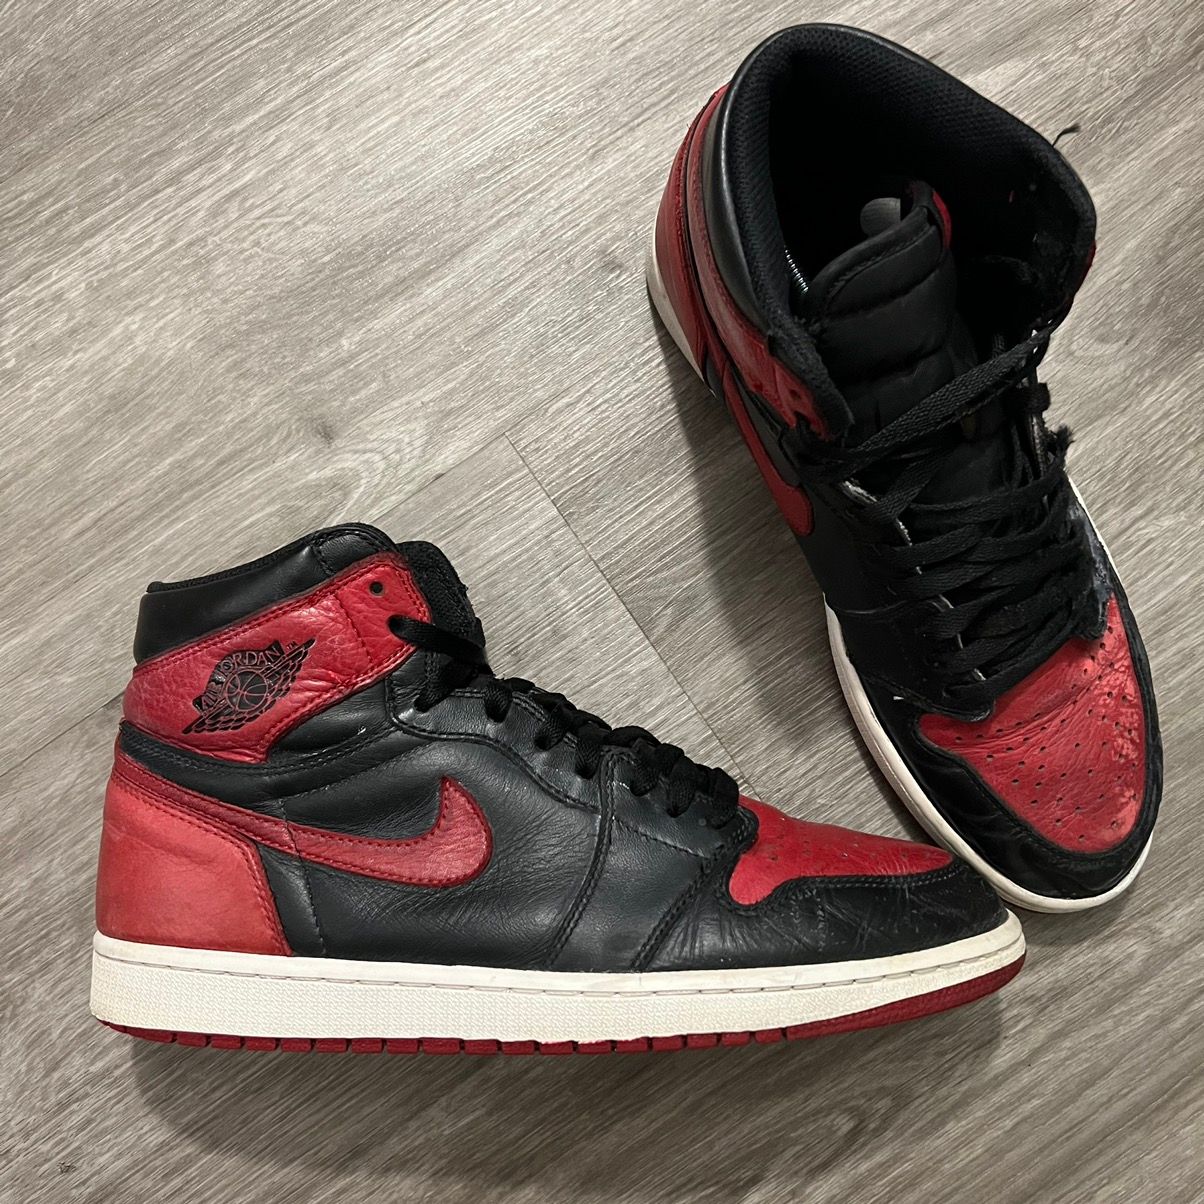 Pre-owned Jordan Nike Air Jordan 1 Bred Banned 2016 Shoes In Red